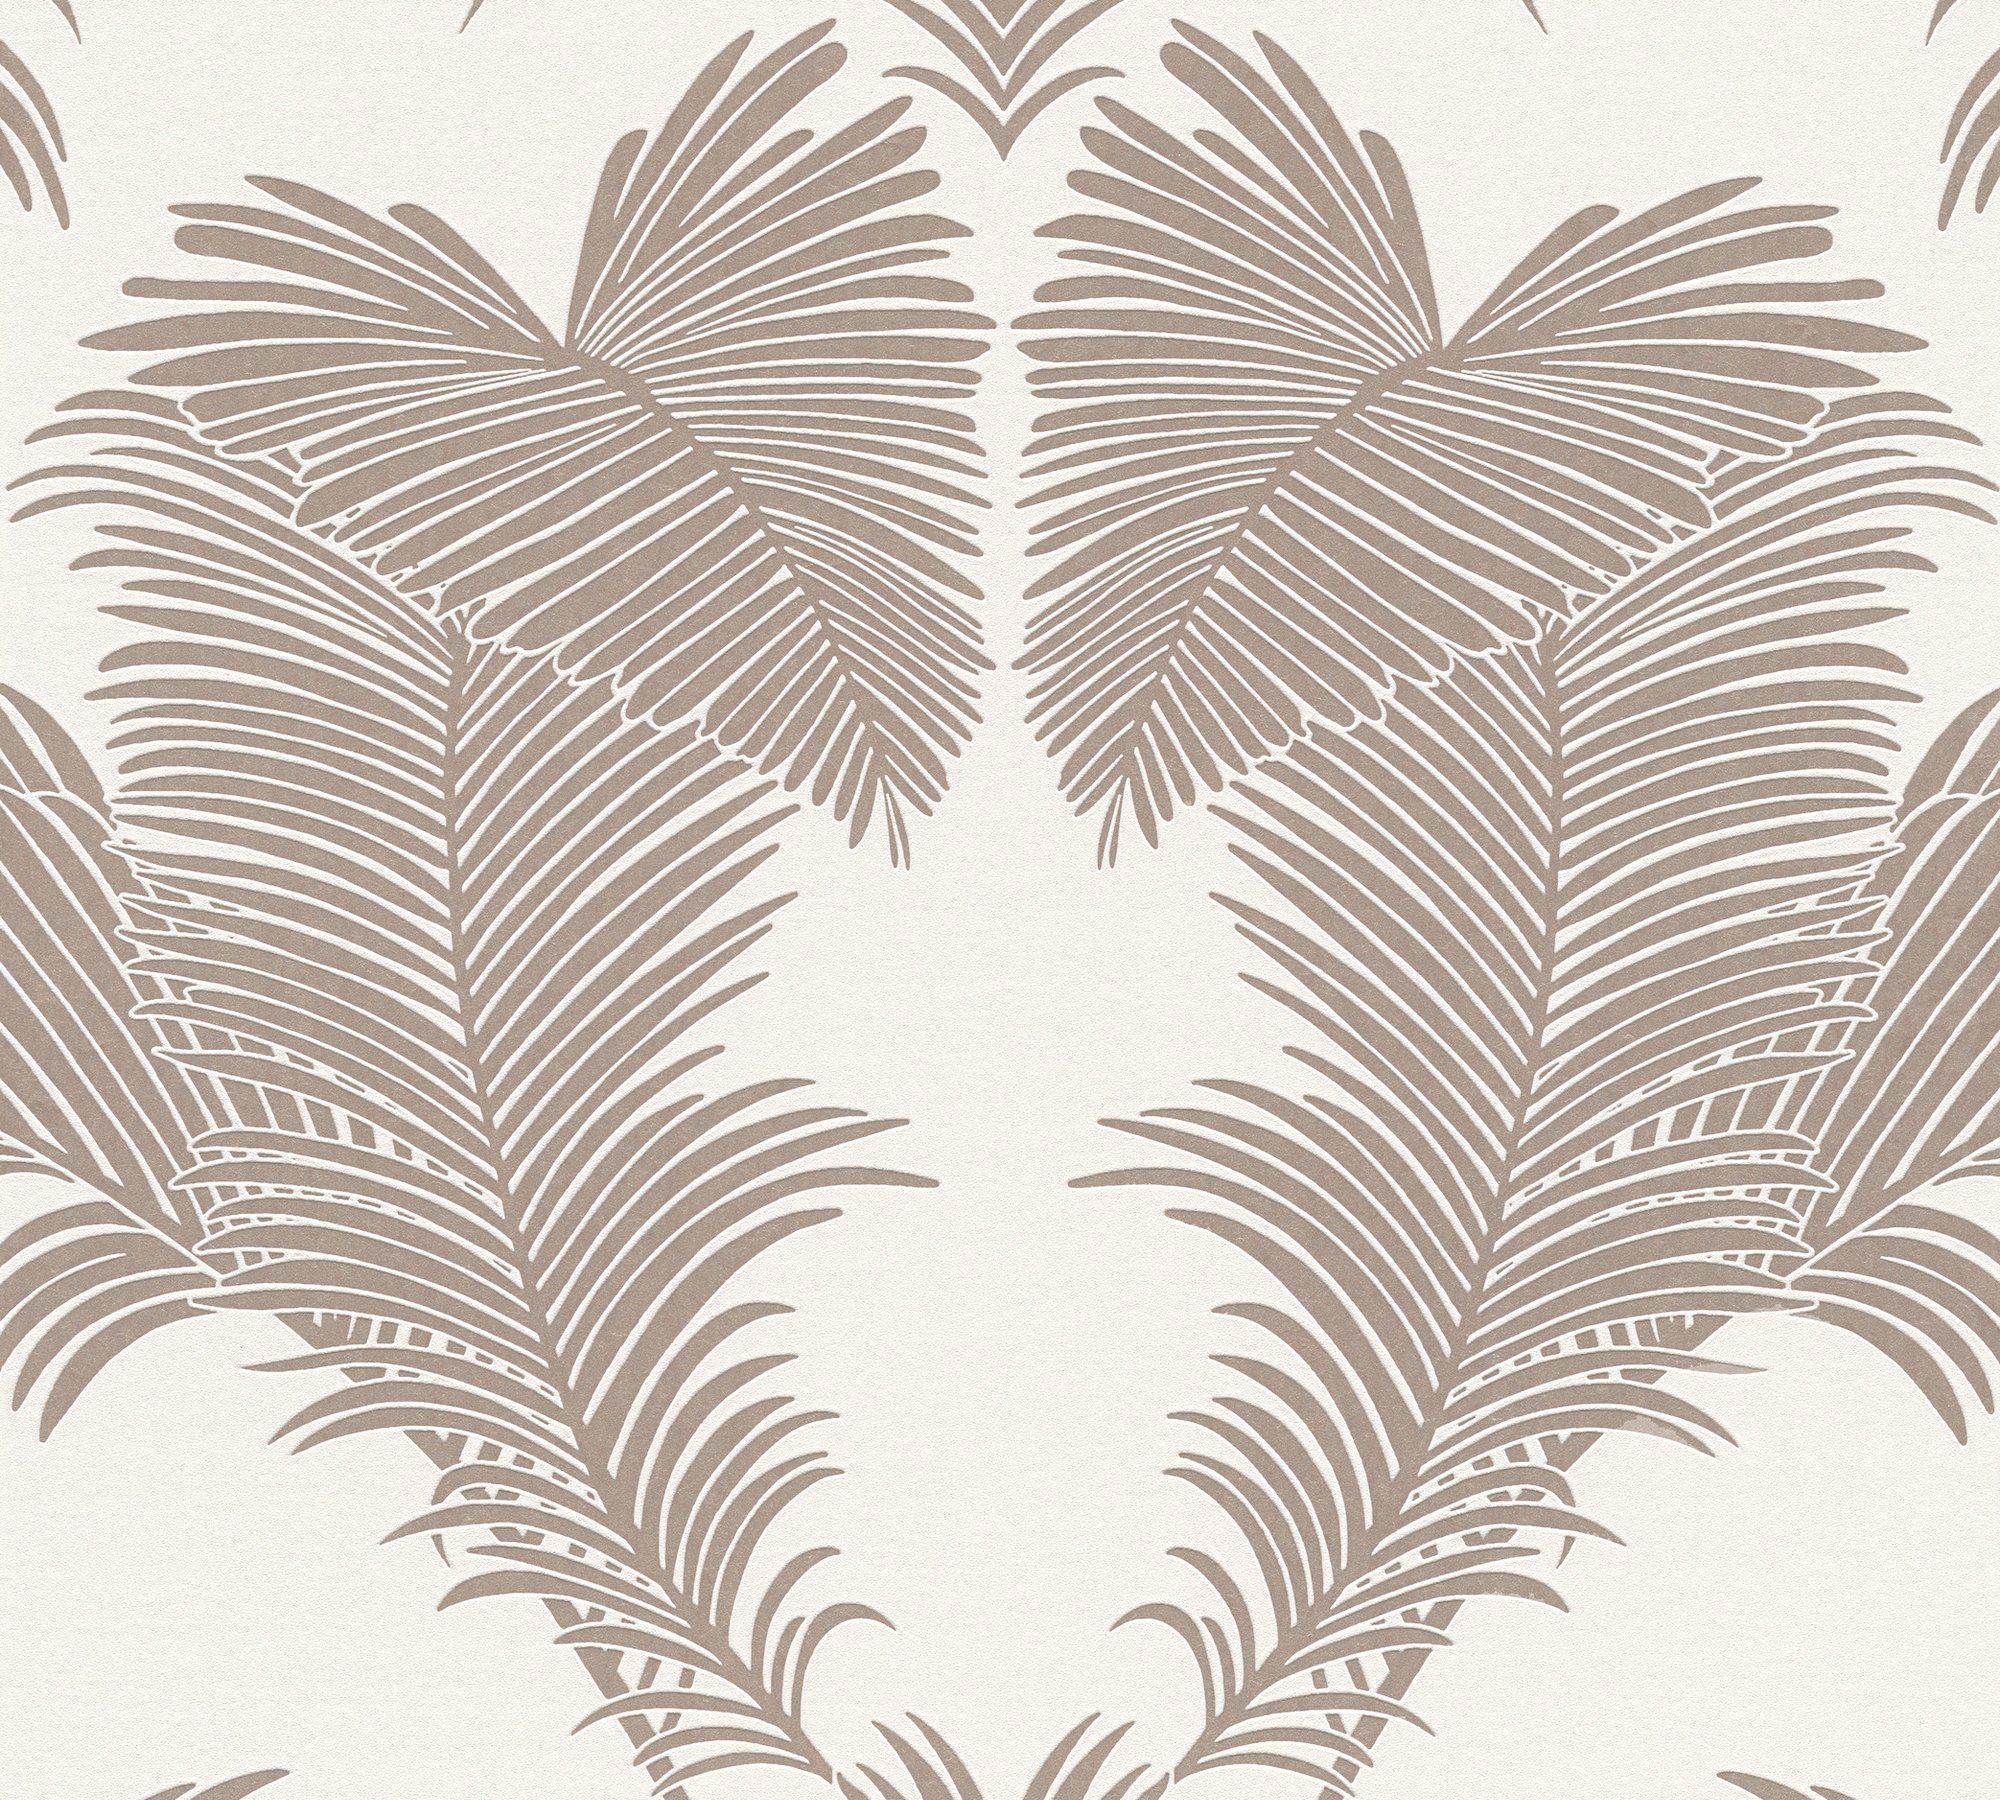 Palmen botanisch, Vliestapete Création metallic/weiß floral, A.S. Dschungeltapete Glänzend Tapete tropisch, Trendwall,